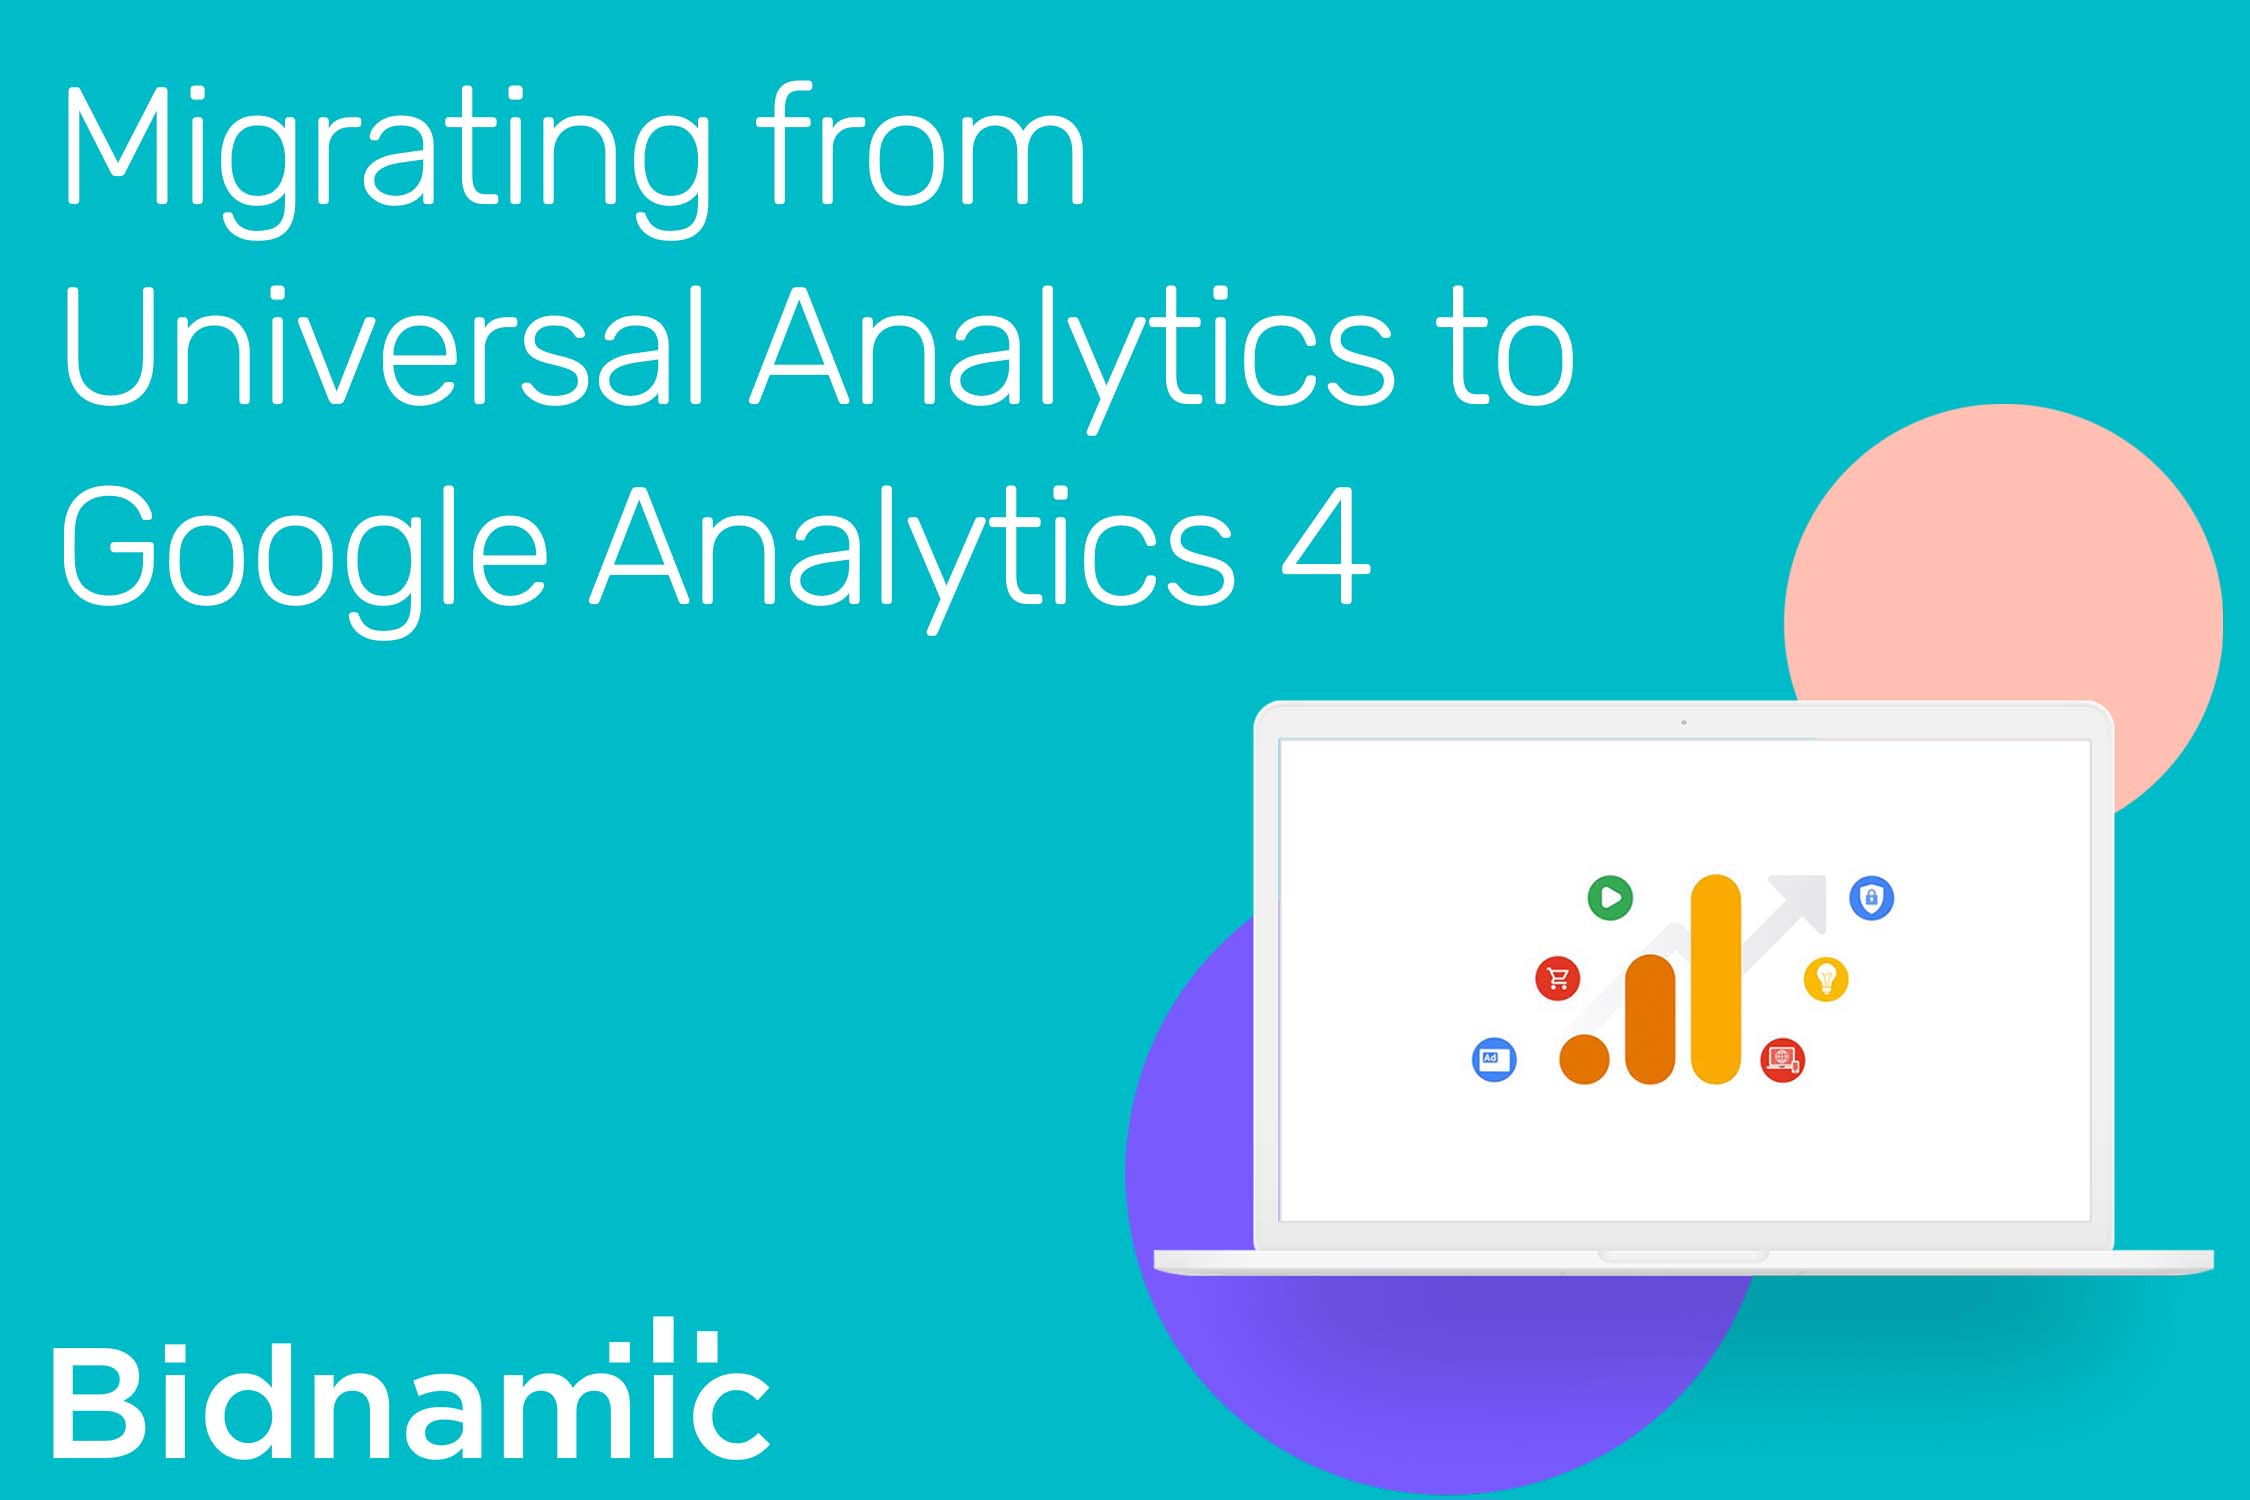 How to migrate from Universal Analytics to Google Analytics 4